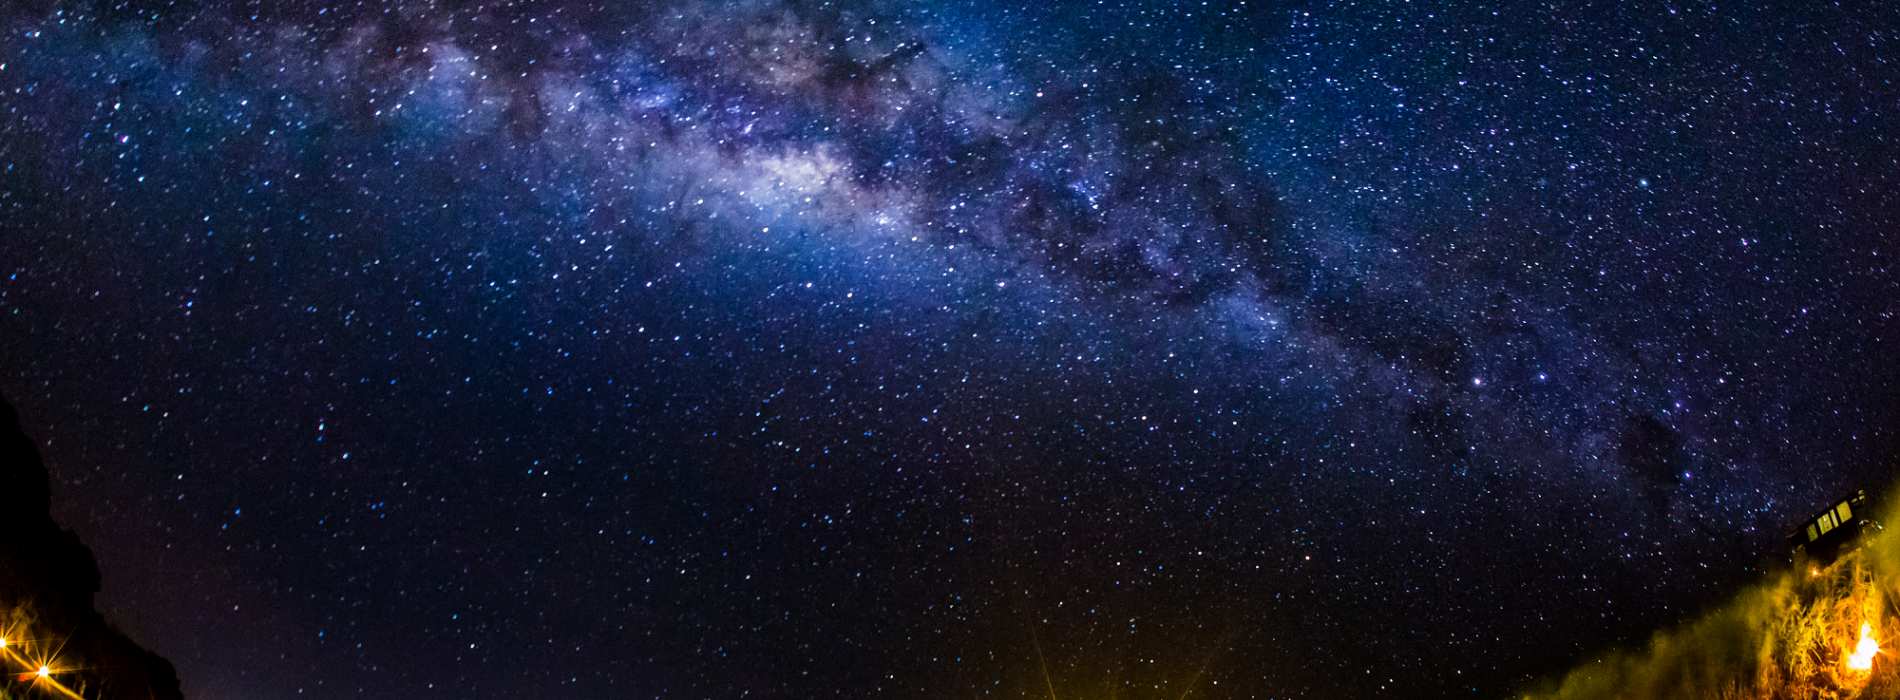 hd-starry-night-sky-wallpaper-1900x700_c.png